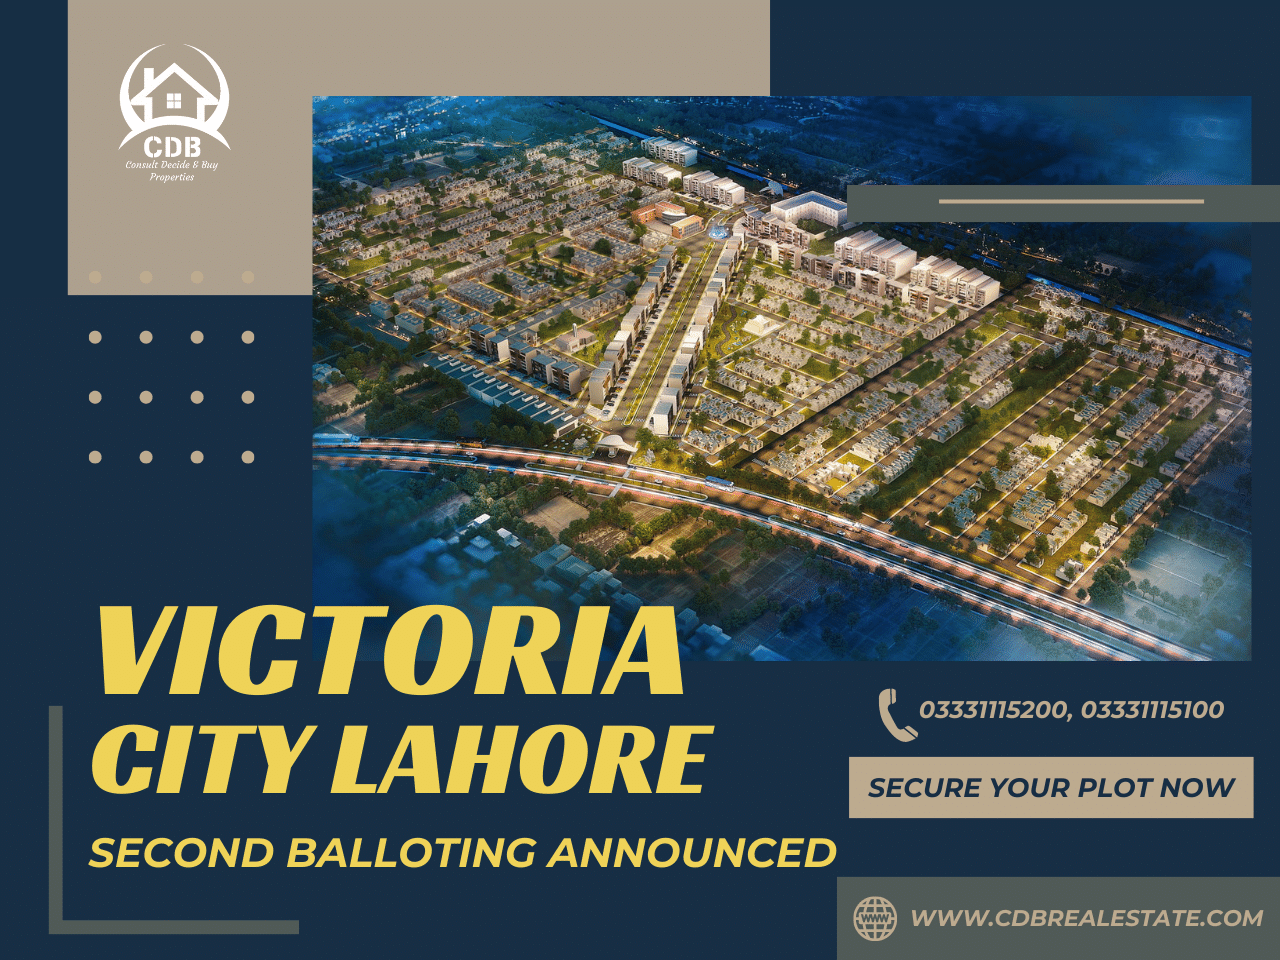 Victoria City Lahore Second Balloting Announced